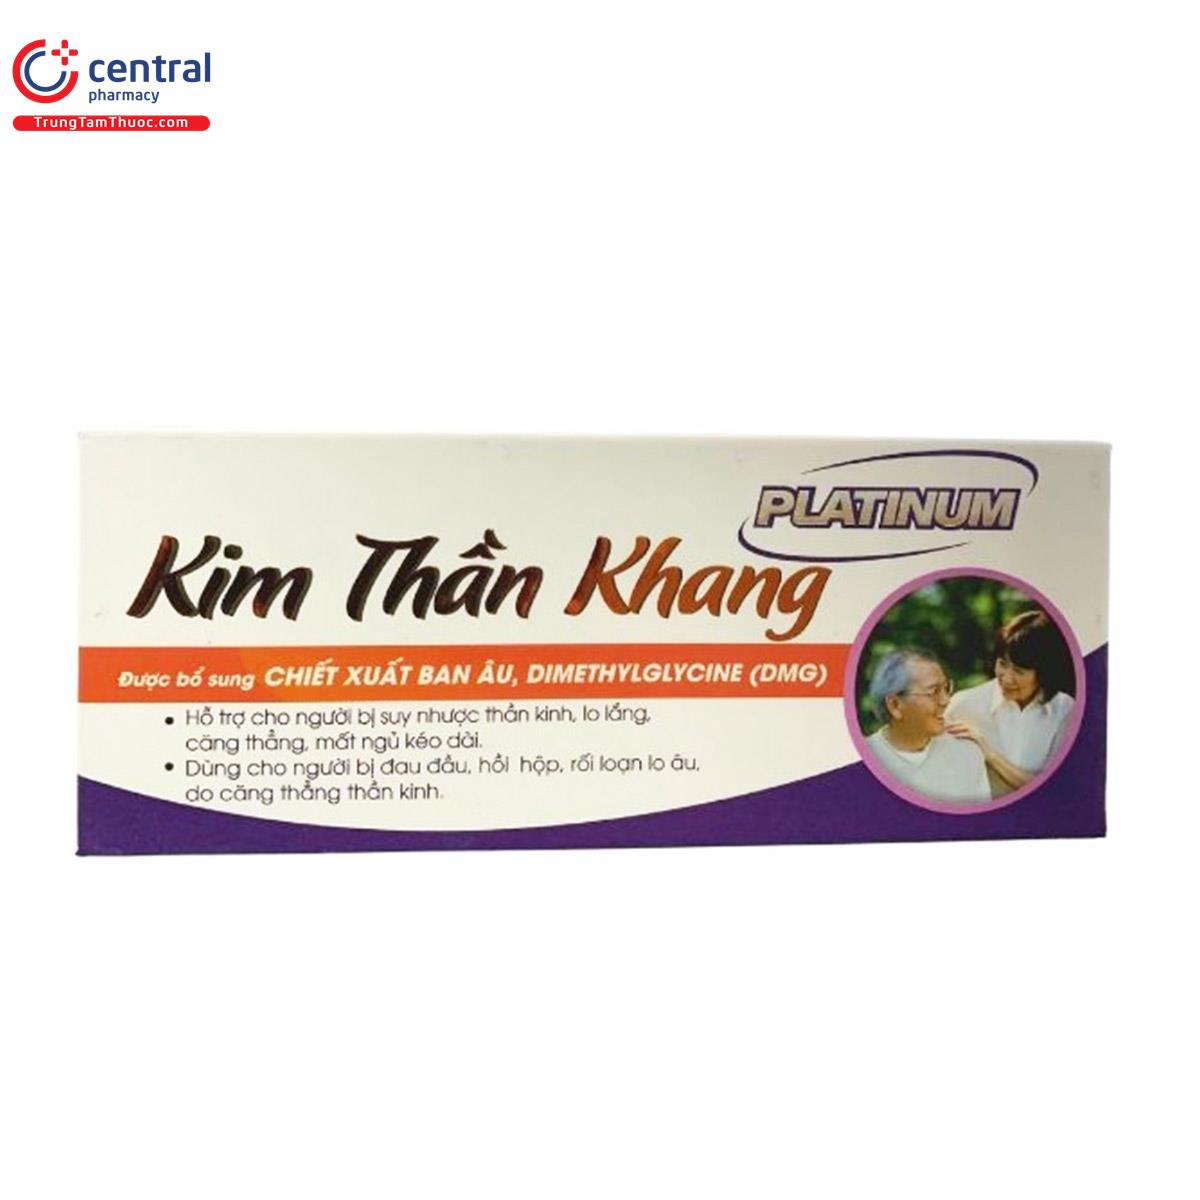 kim than khang platinum 4 B0783